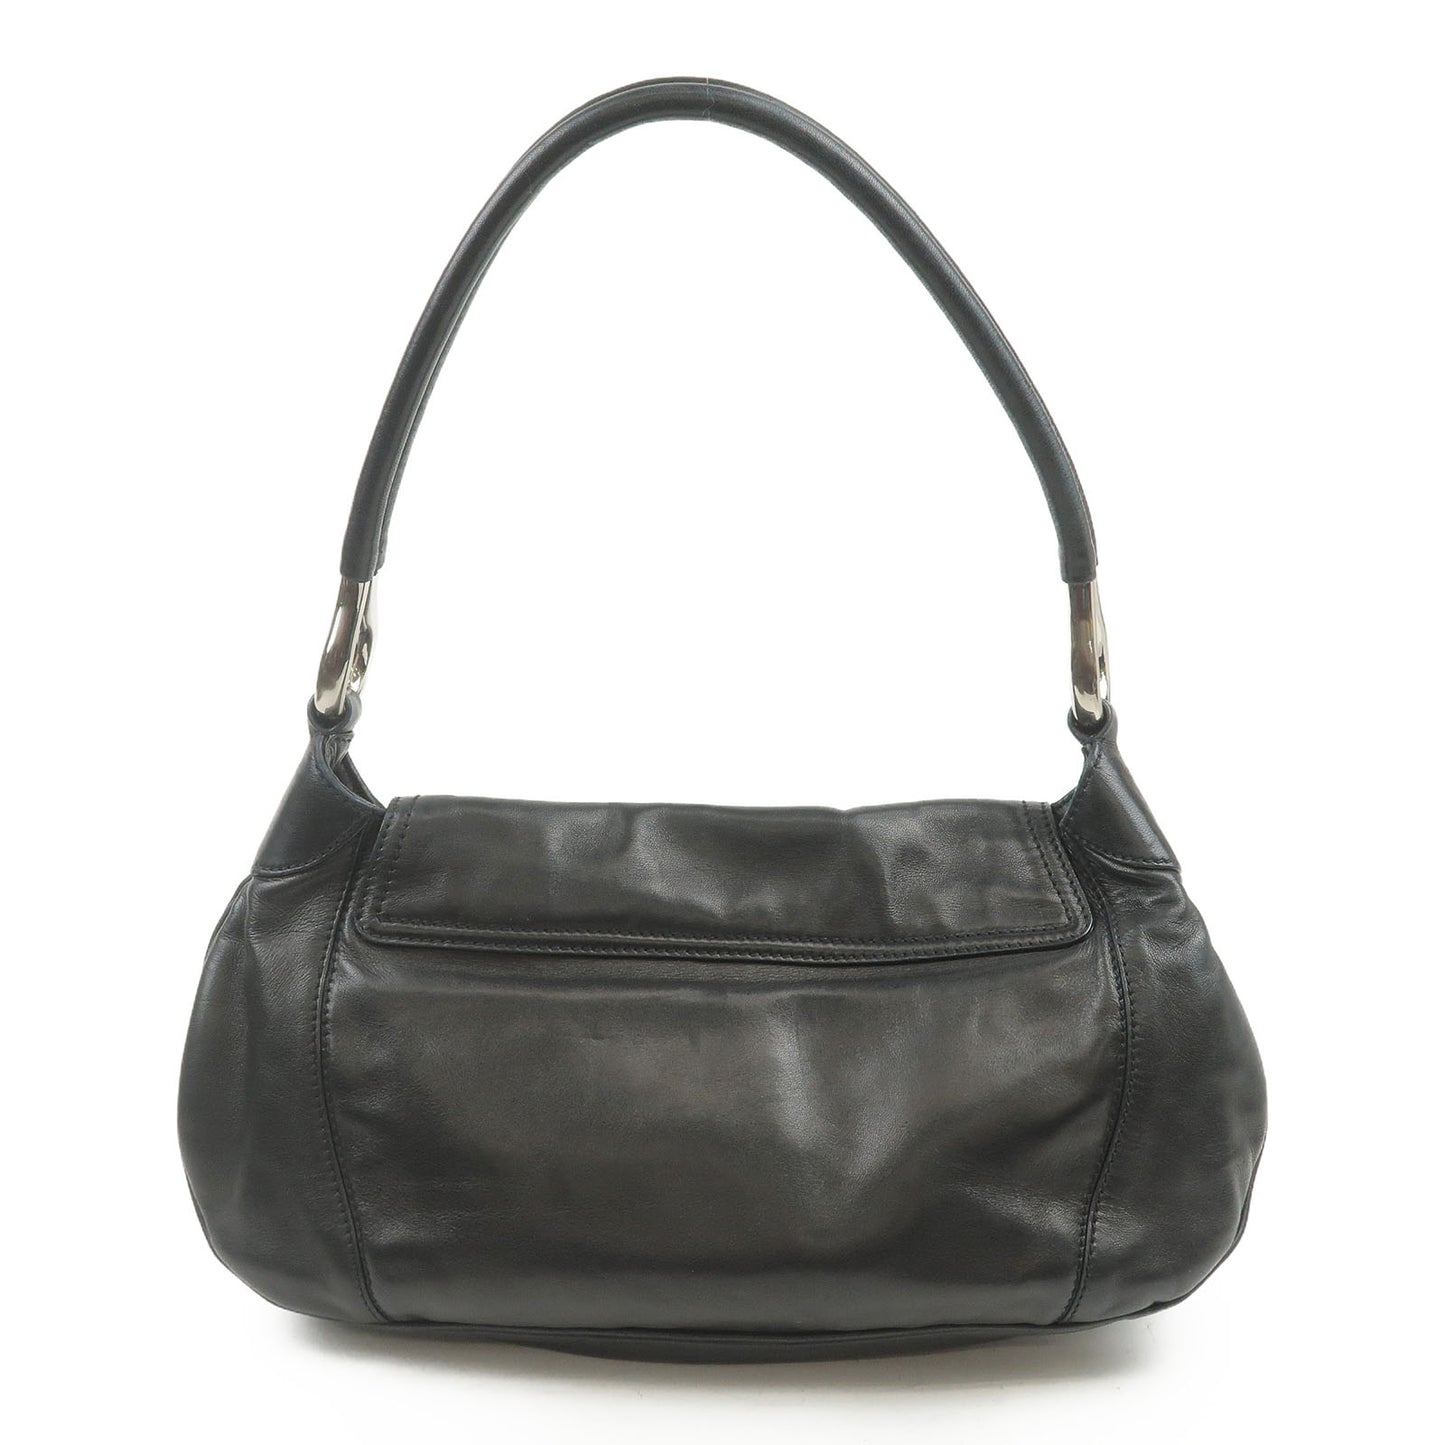 PRADA Leather Shoulder Bag NERO Black